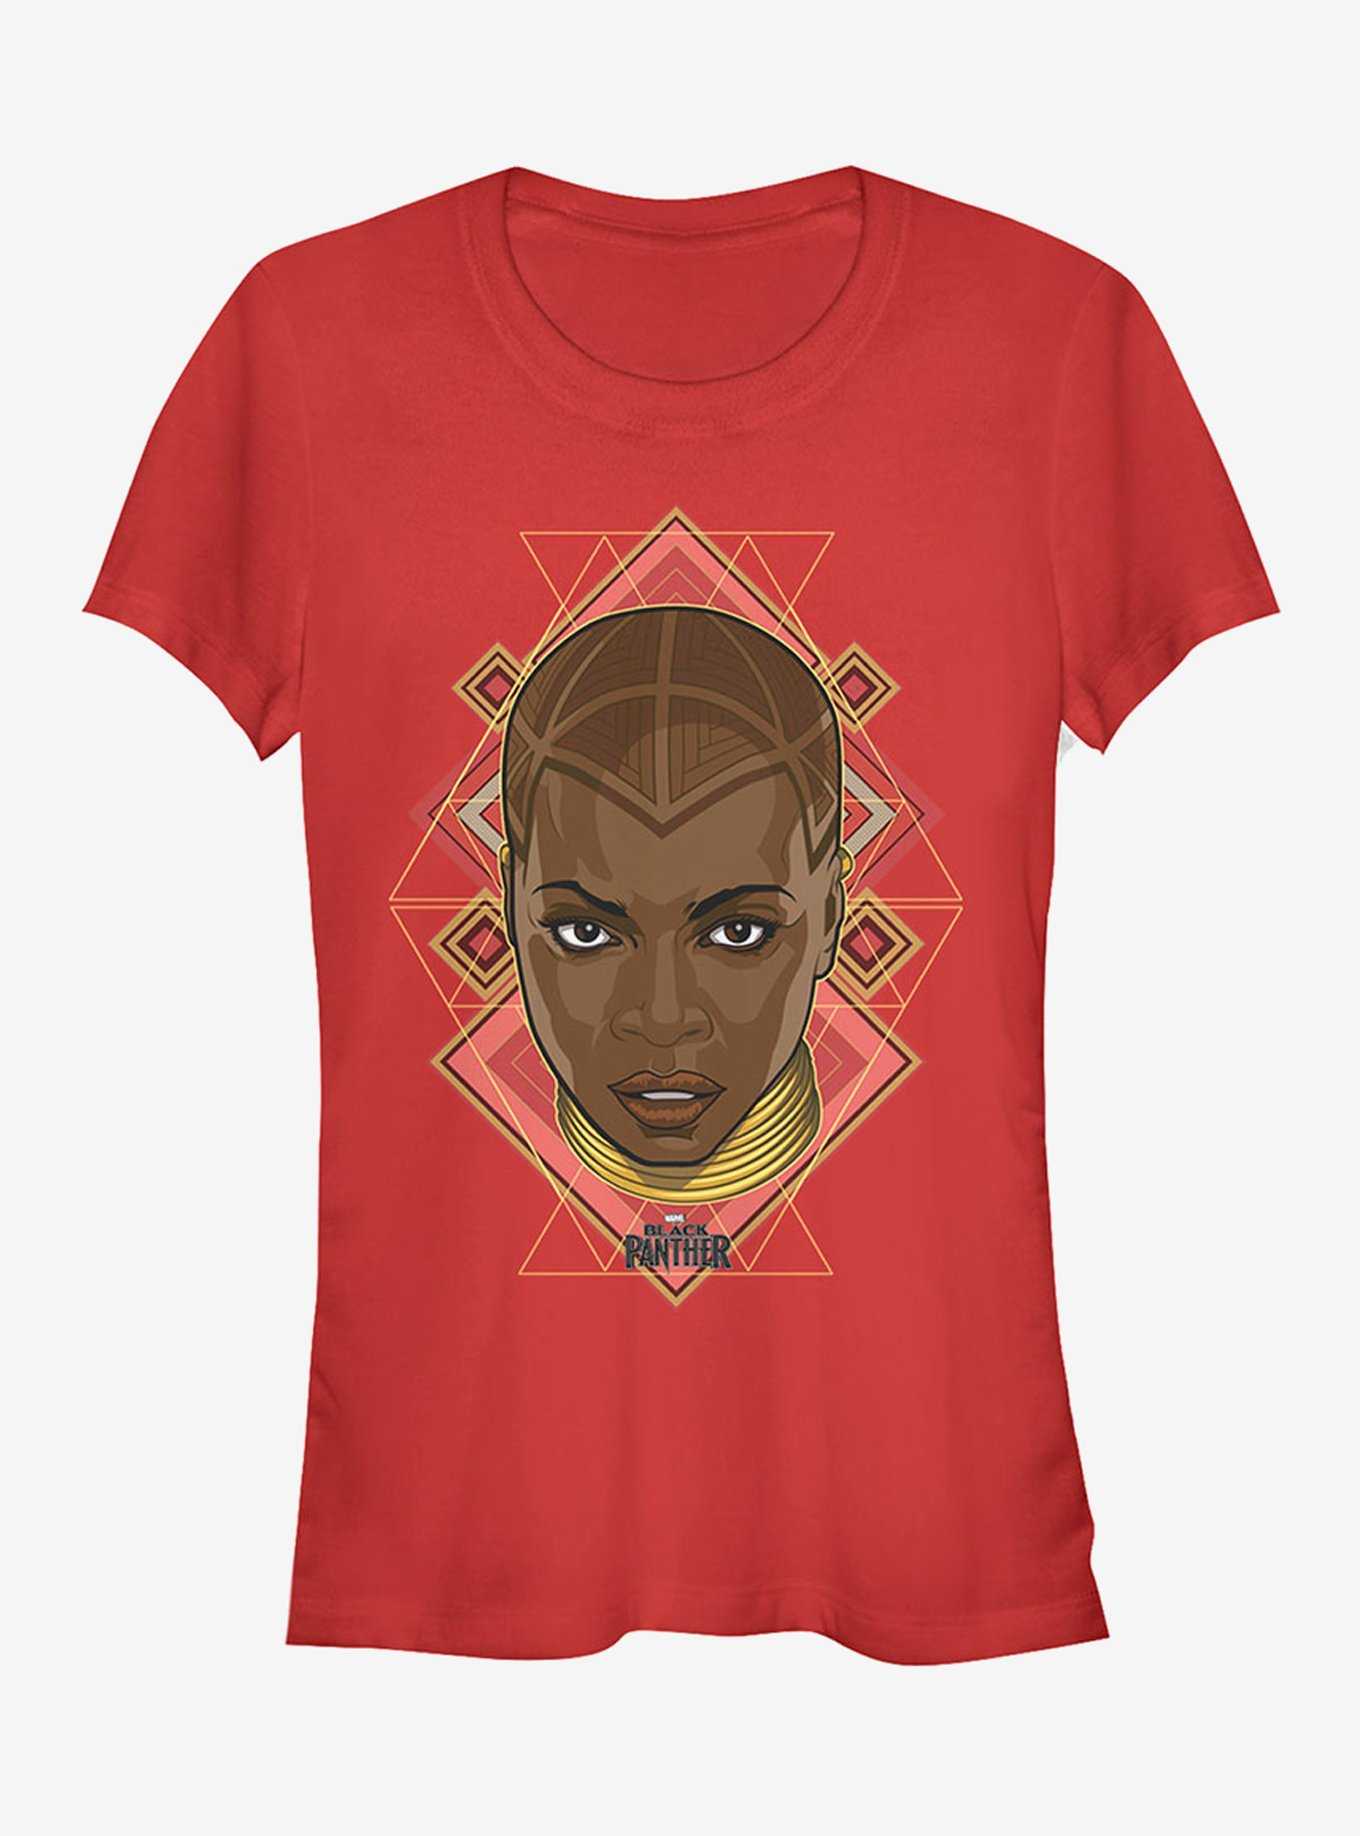 Marvel Black Panther 2018 Okoye Portrait Girls T-Shirt, , hi-res